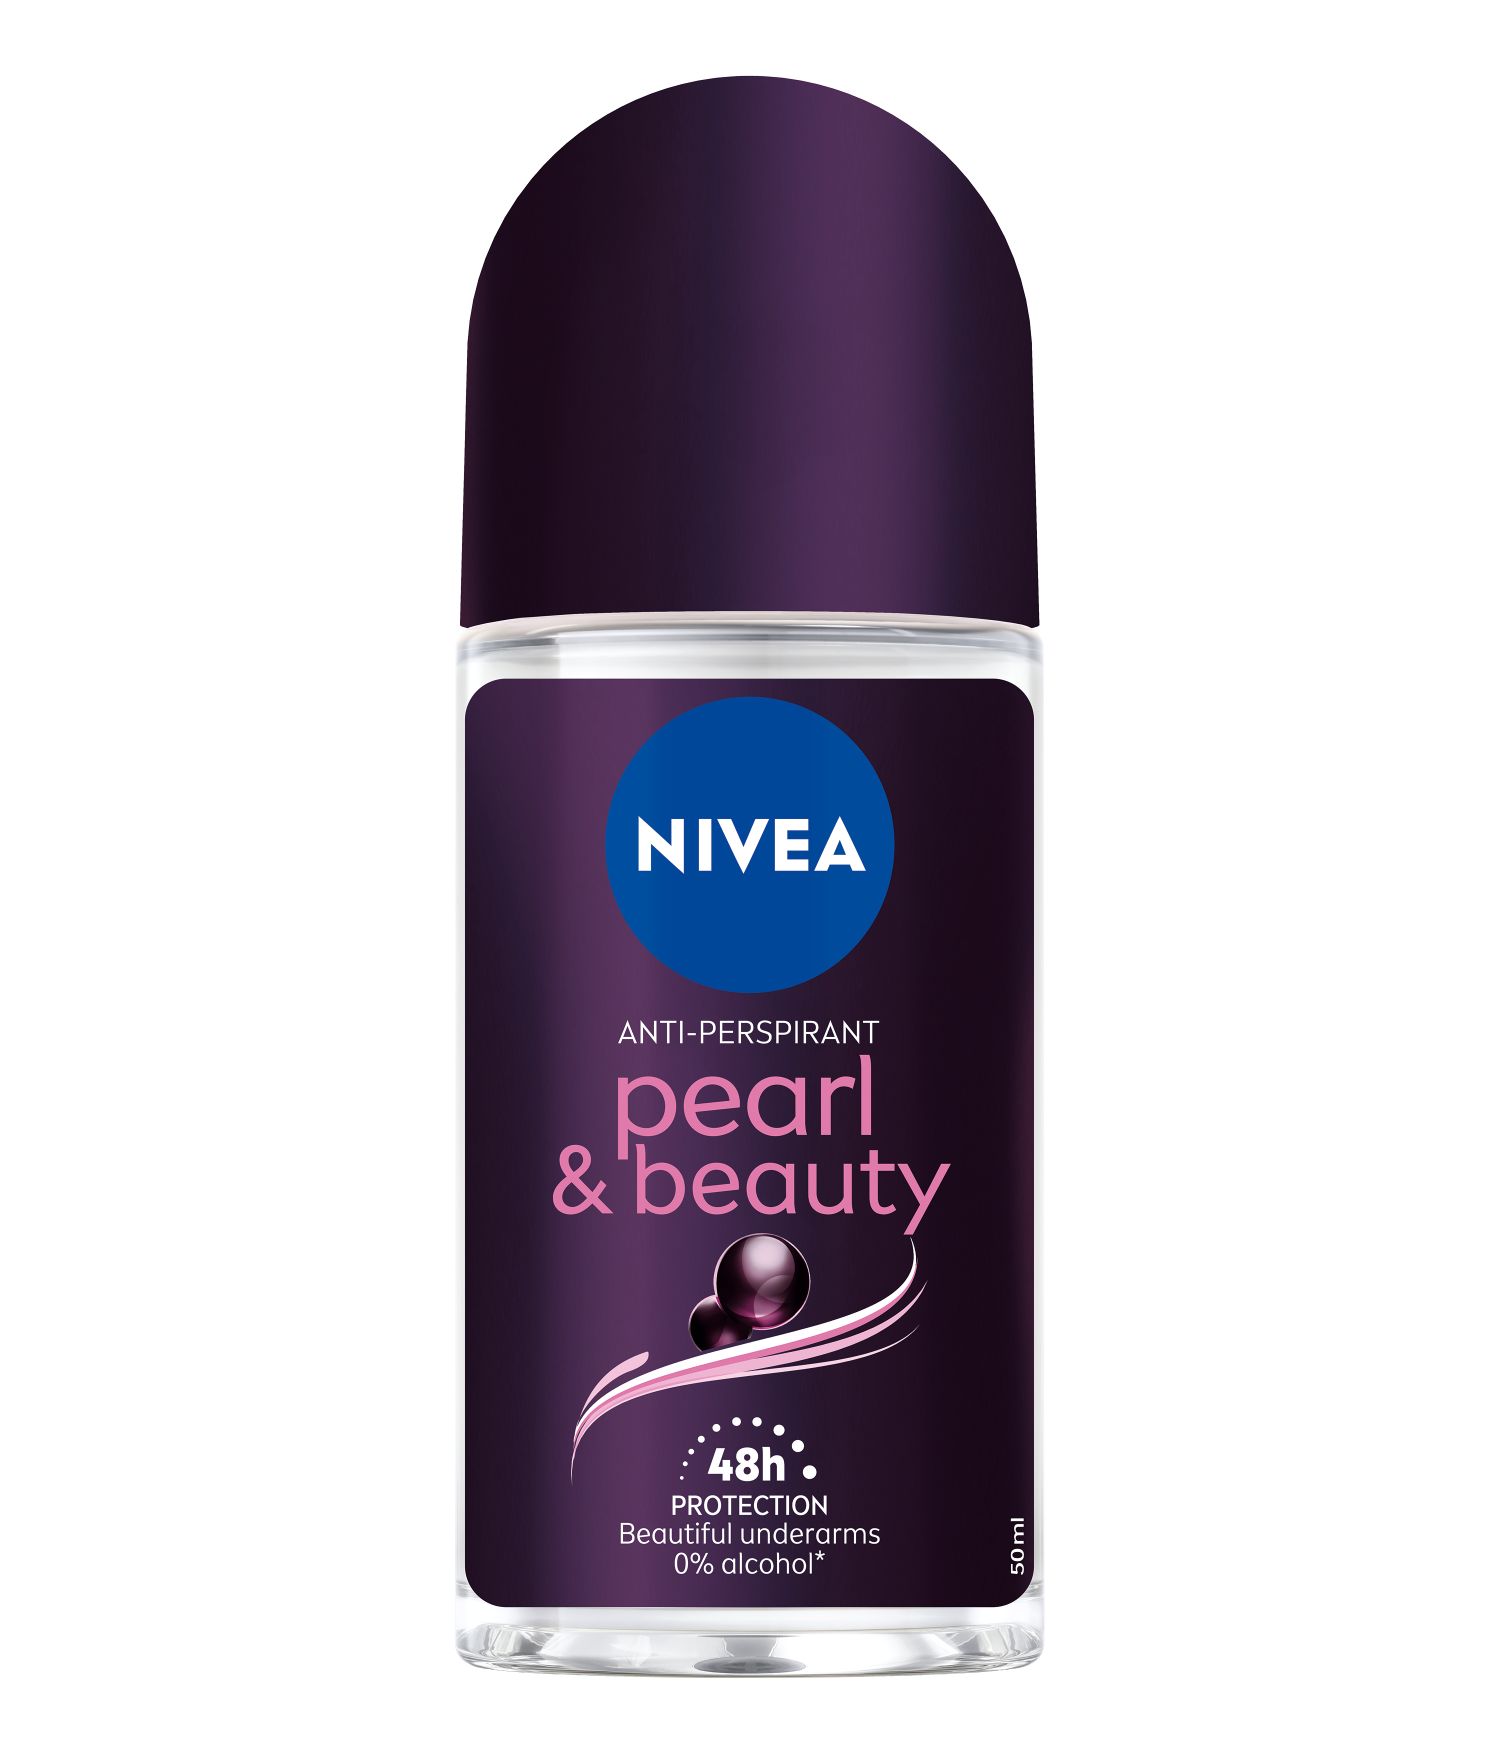 NIVEA, Neverovatan spoj dragocenih bisera i pouzdane nege uz  NIVEA Pearl&#038;Beauty Black antiperspirante, Gradski Magazin